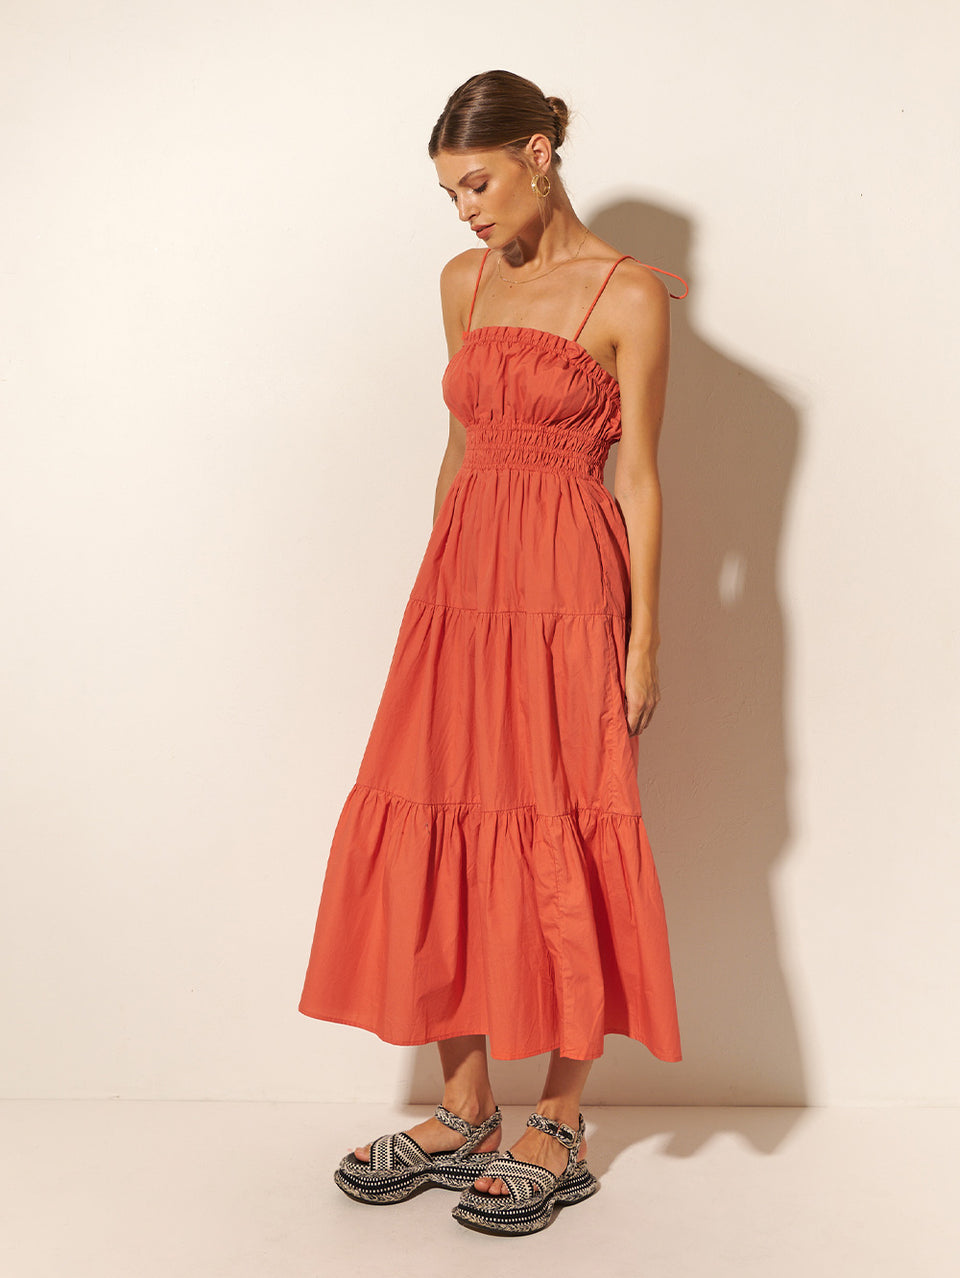 Studio model wears KIVARI Casini dress - a coral block colour dress with thin straps, elasticated waist and tiered skirt.